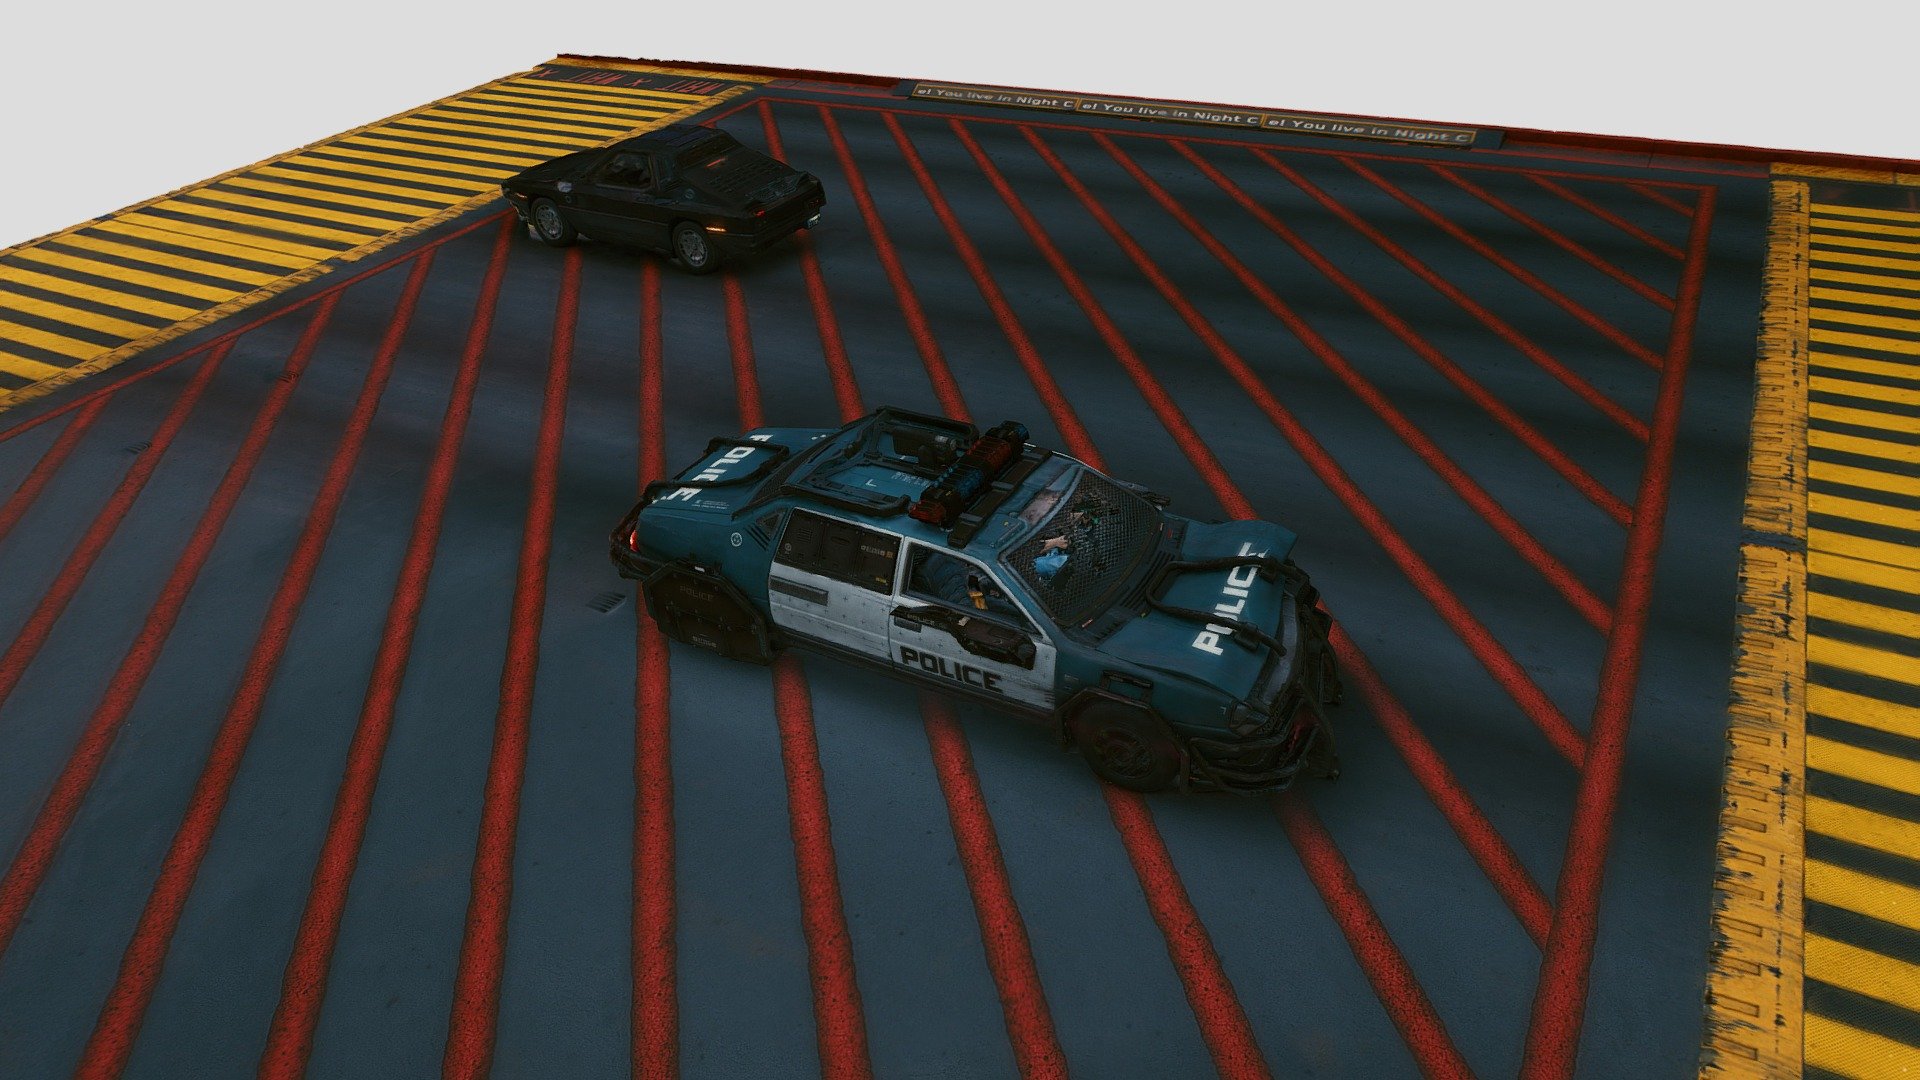 Cyberpunk Police Car & Street Intersection